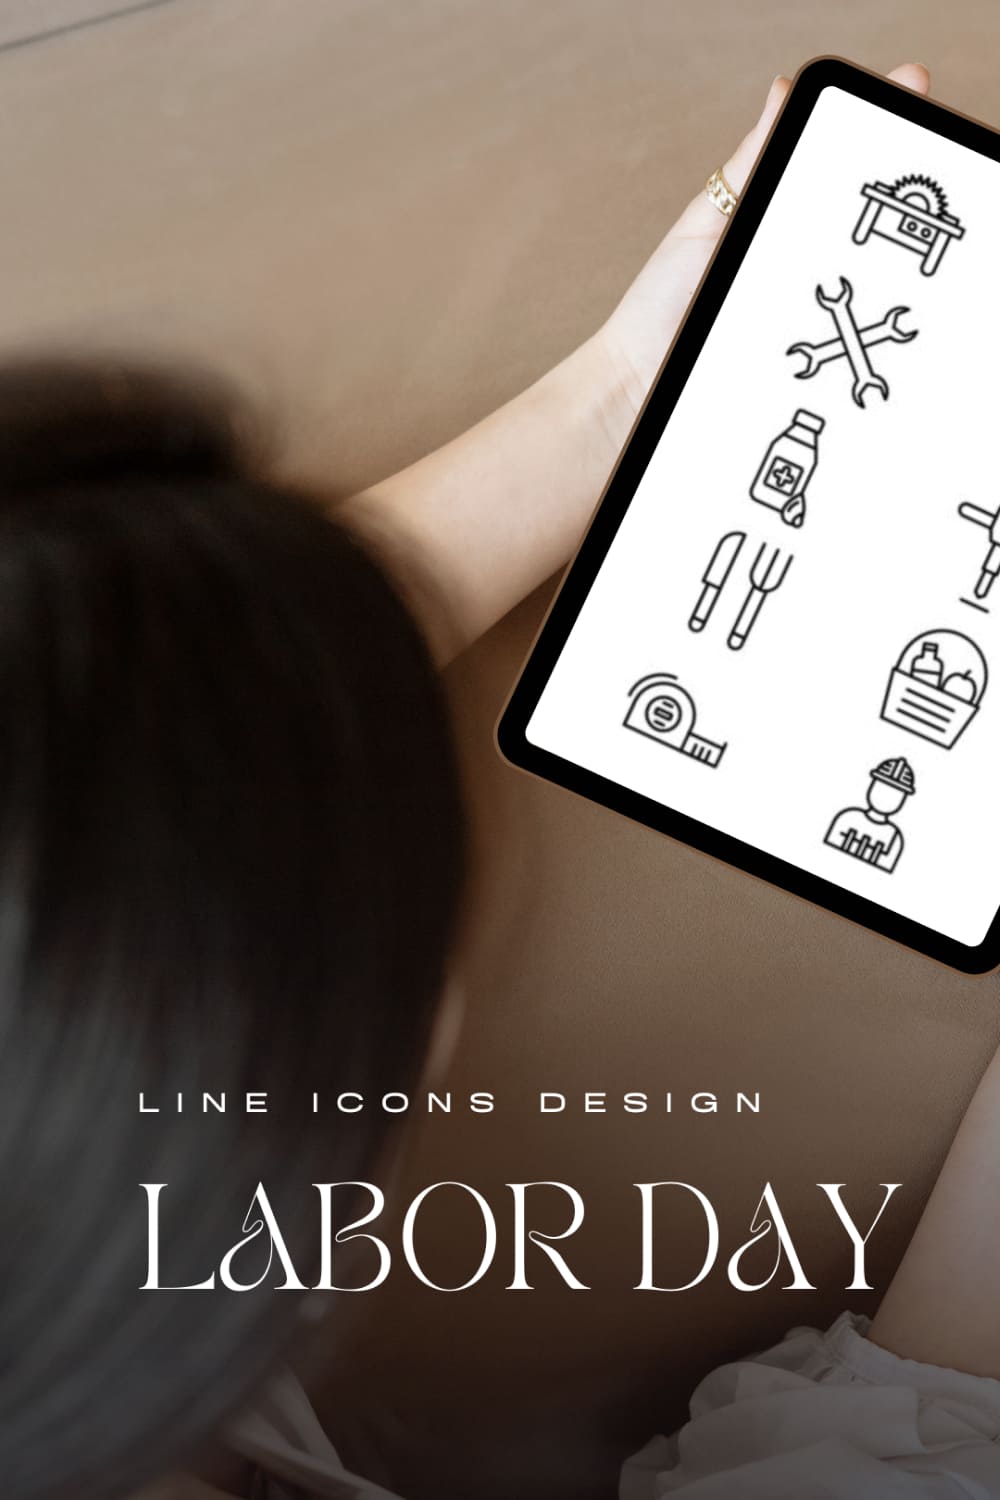 Labor Day Line Icons Design - Pinterest.